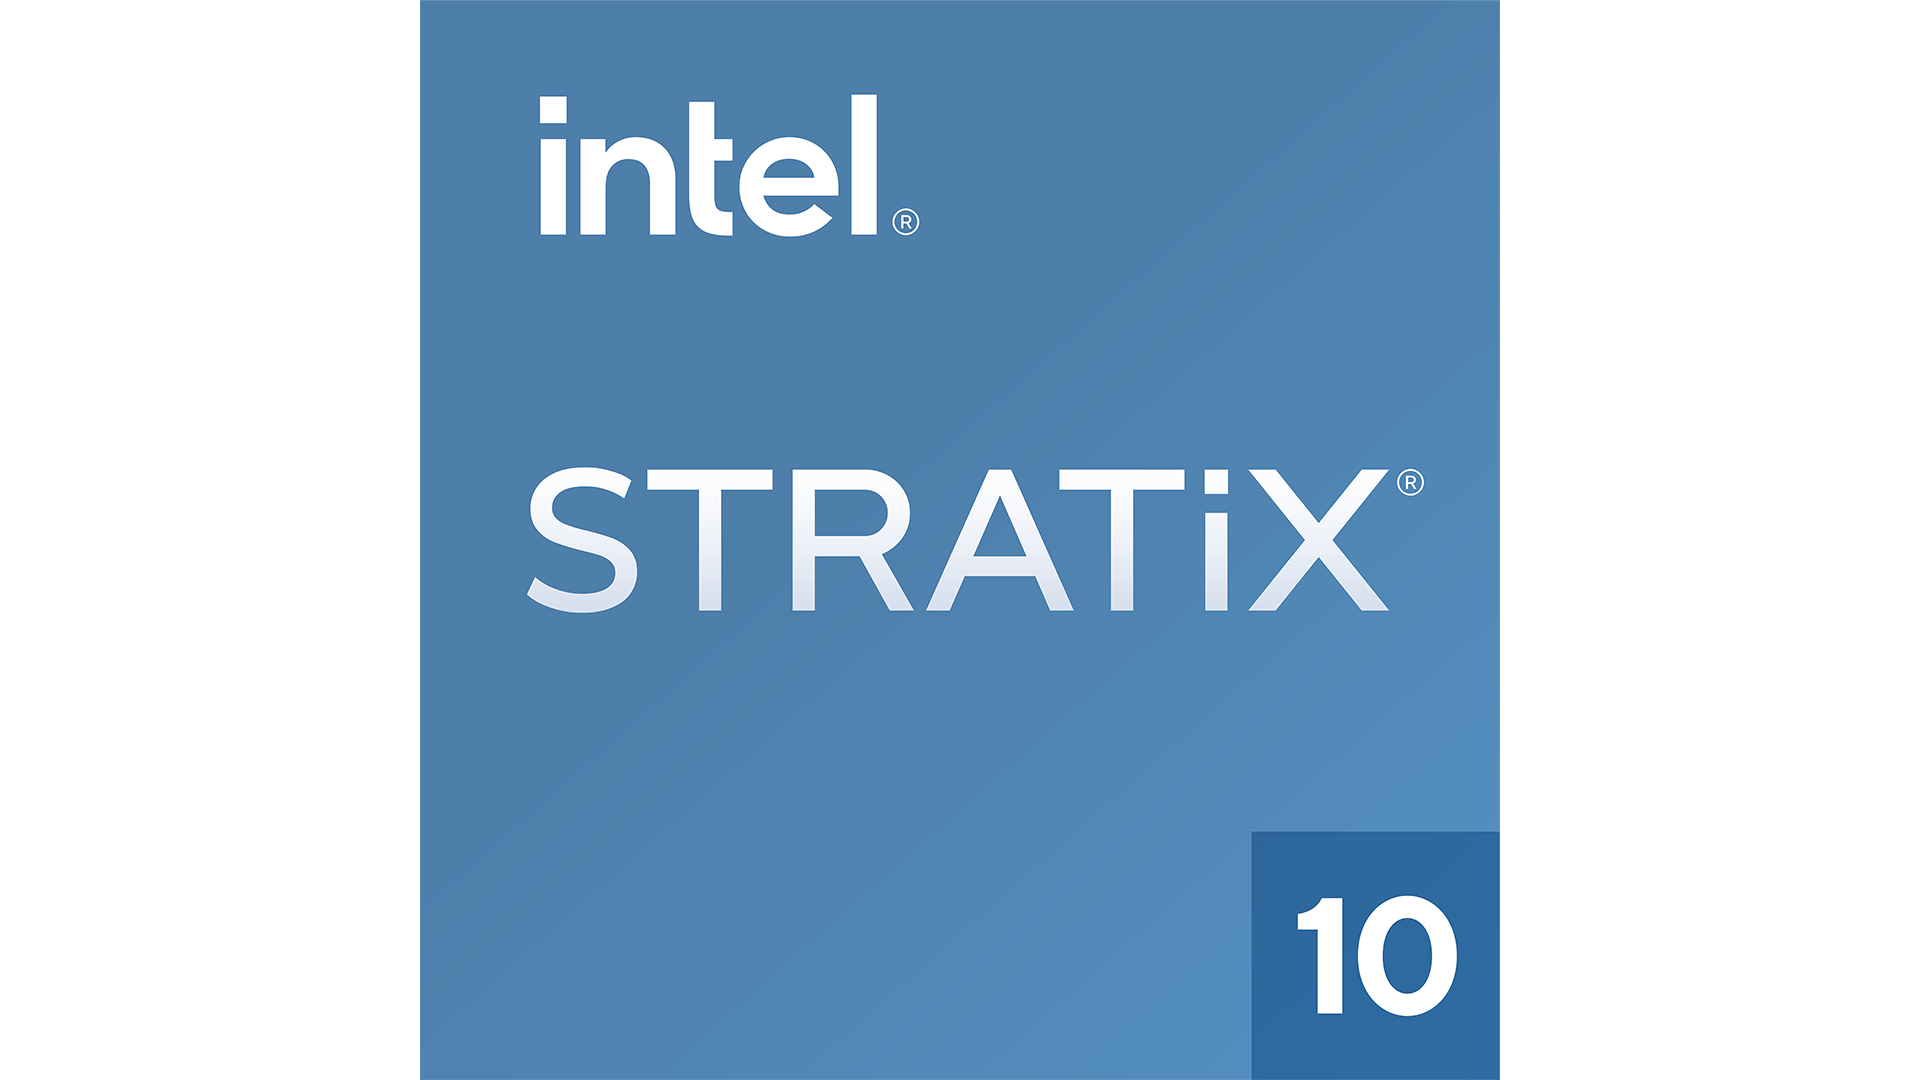 Intel® Stratix® 10 MX FPGA